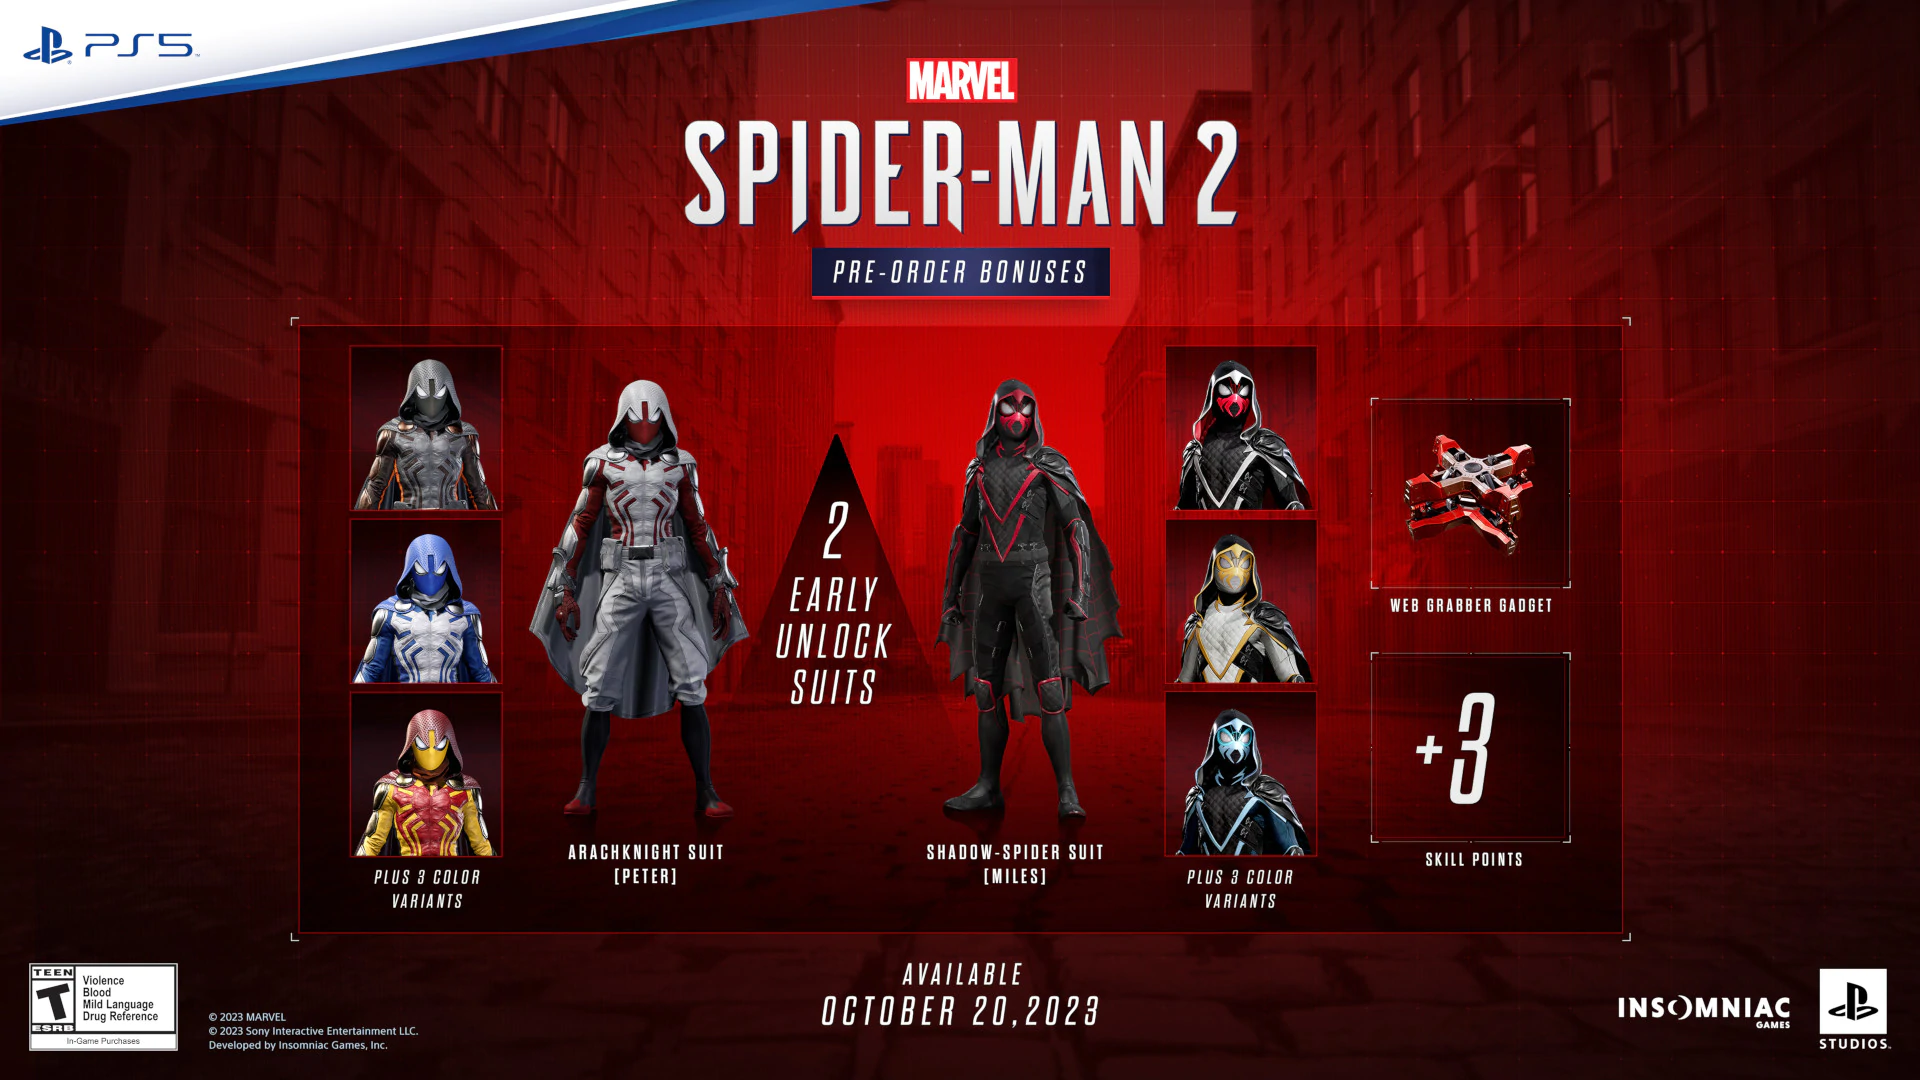 marvels spider man 2 pre order bonuses | Spider-Man 2 | เก็บเงินรอ Marvel’s Spider-Man 2 มีกำหนดวางขาย 20 ตุลาคม 2023 บน PS5 พร้อมเผยชุดสะสมน่าโดนสุดๆ